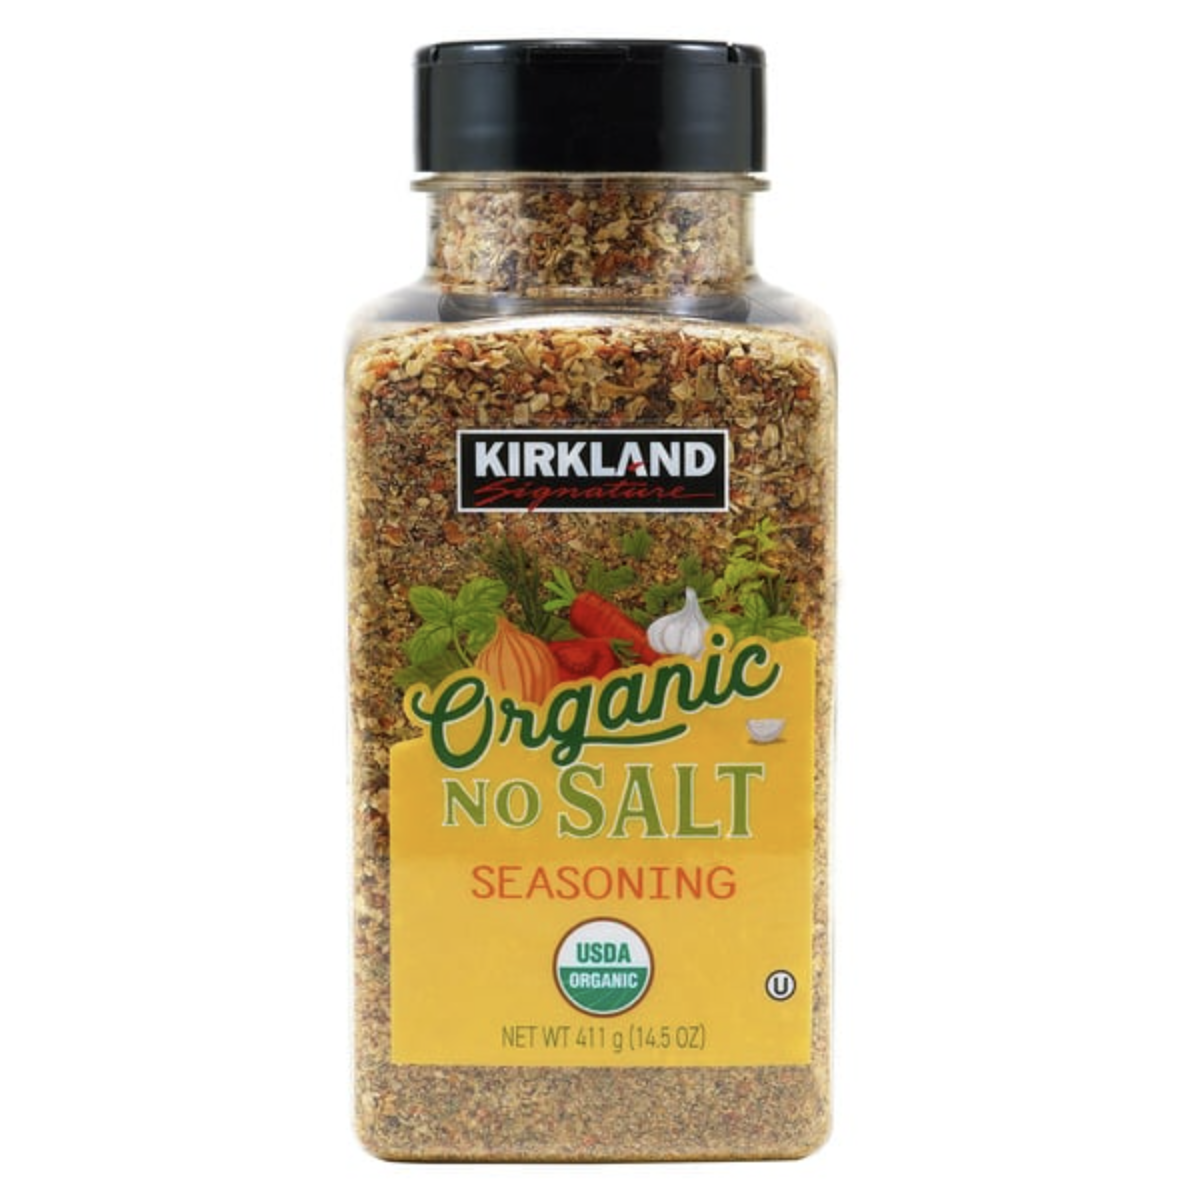 Kirkland Organic No Salt Seasoning